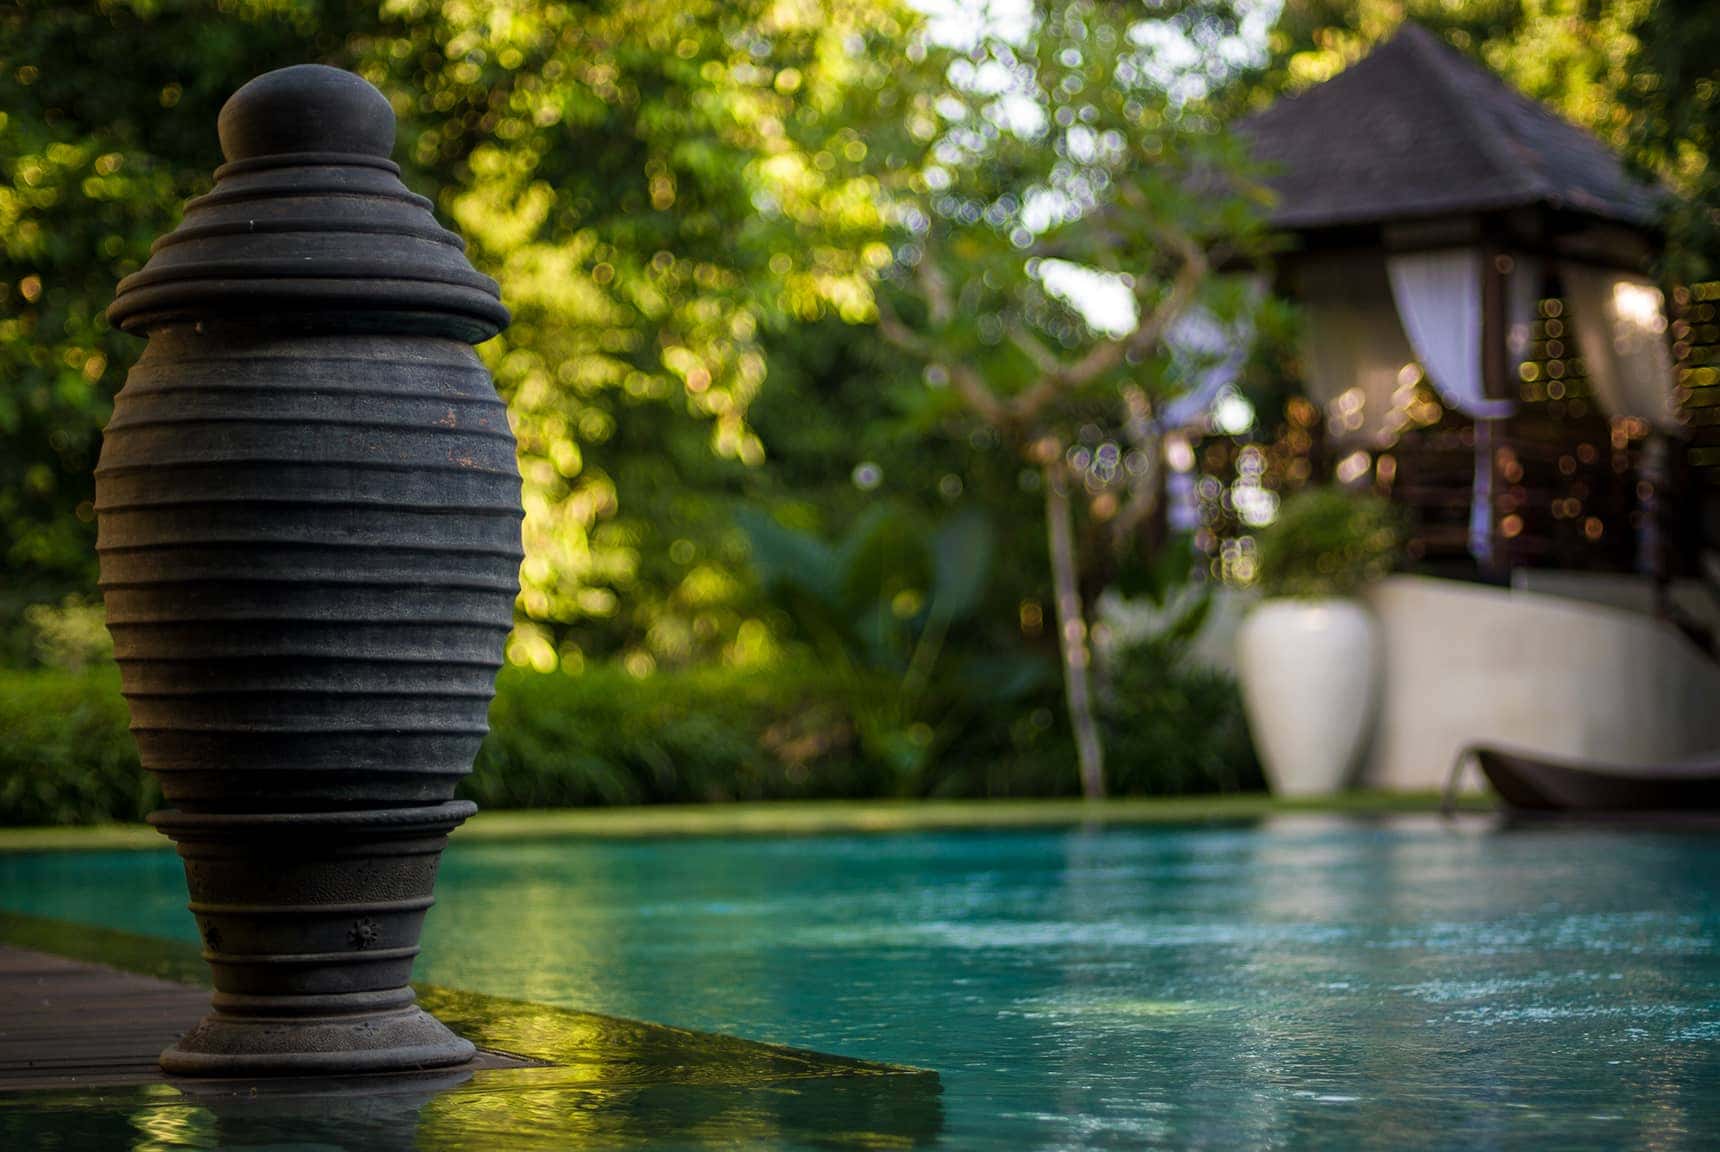 Villa Karishma - Umalas, Bali Indonesia (Bali villa photography by master photographer Rick Carmichael of LuxViz)